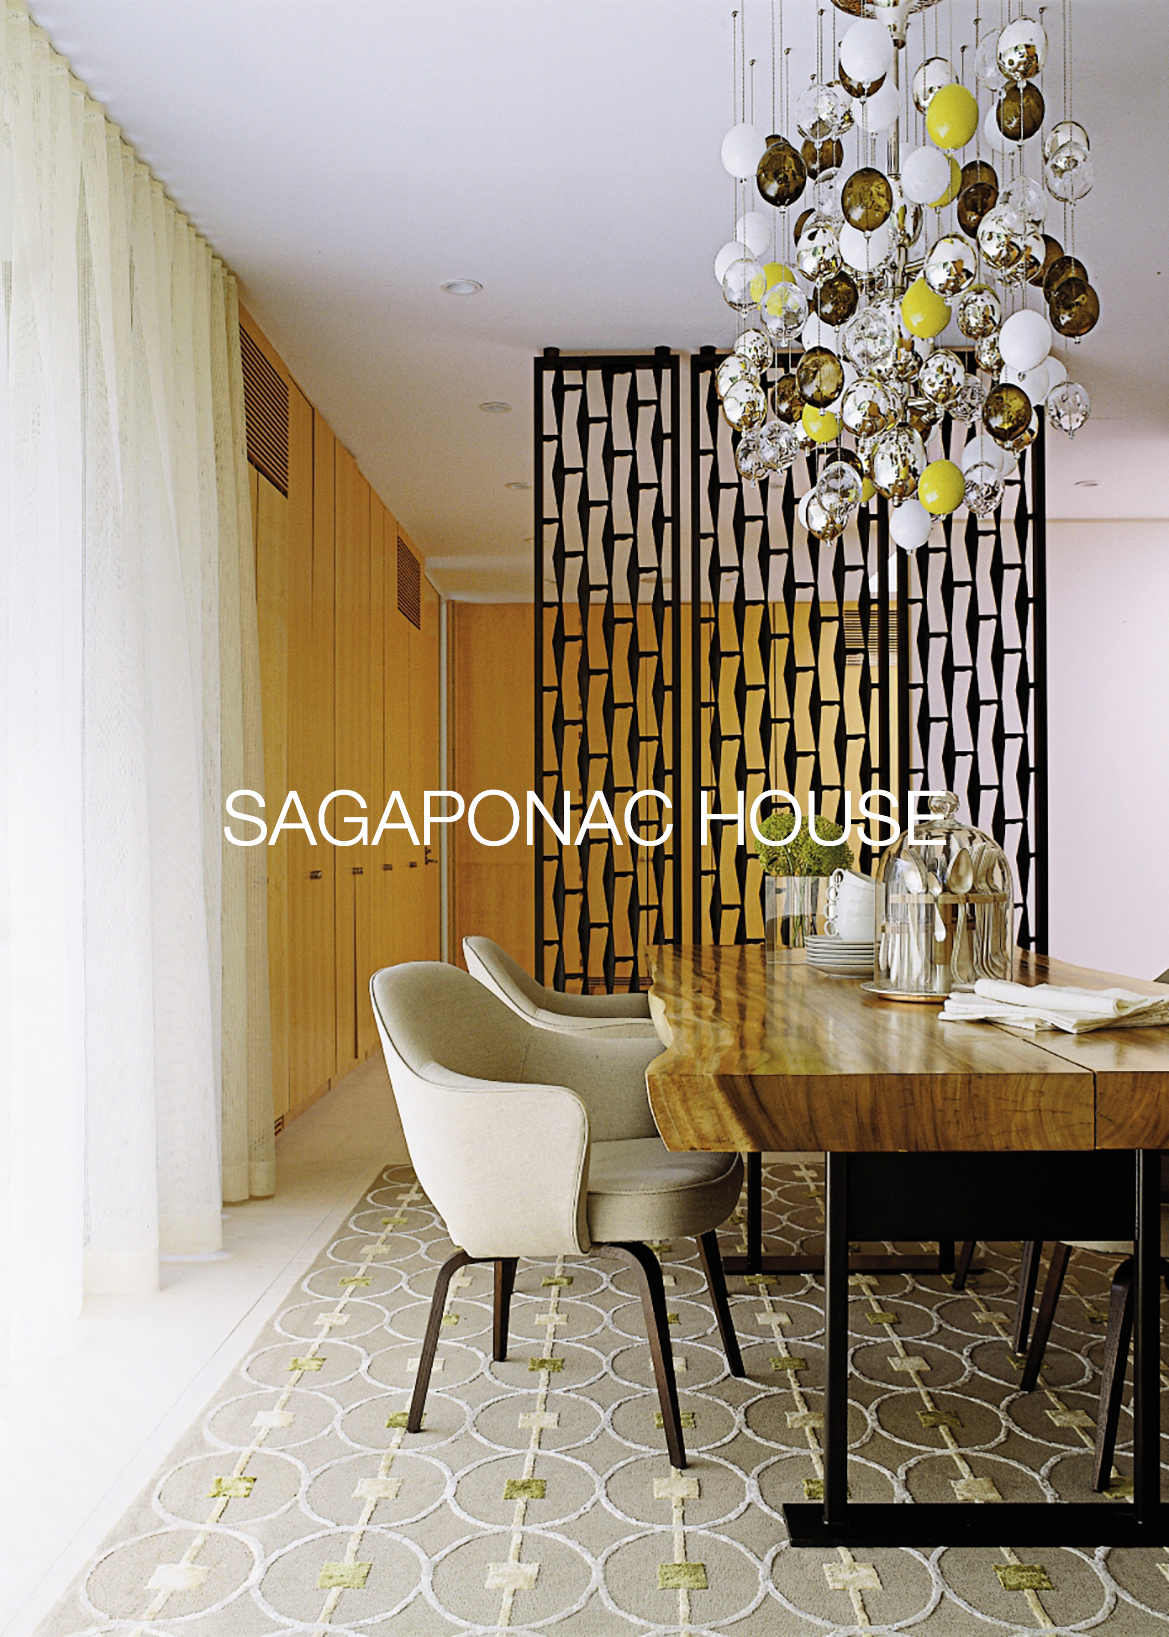 Sagaponic House.jpg